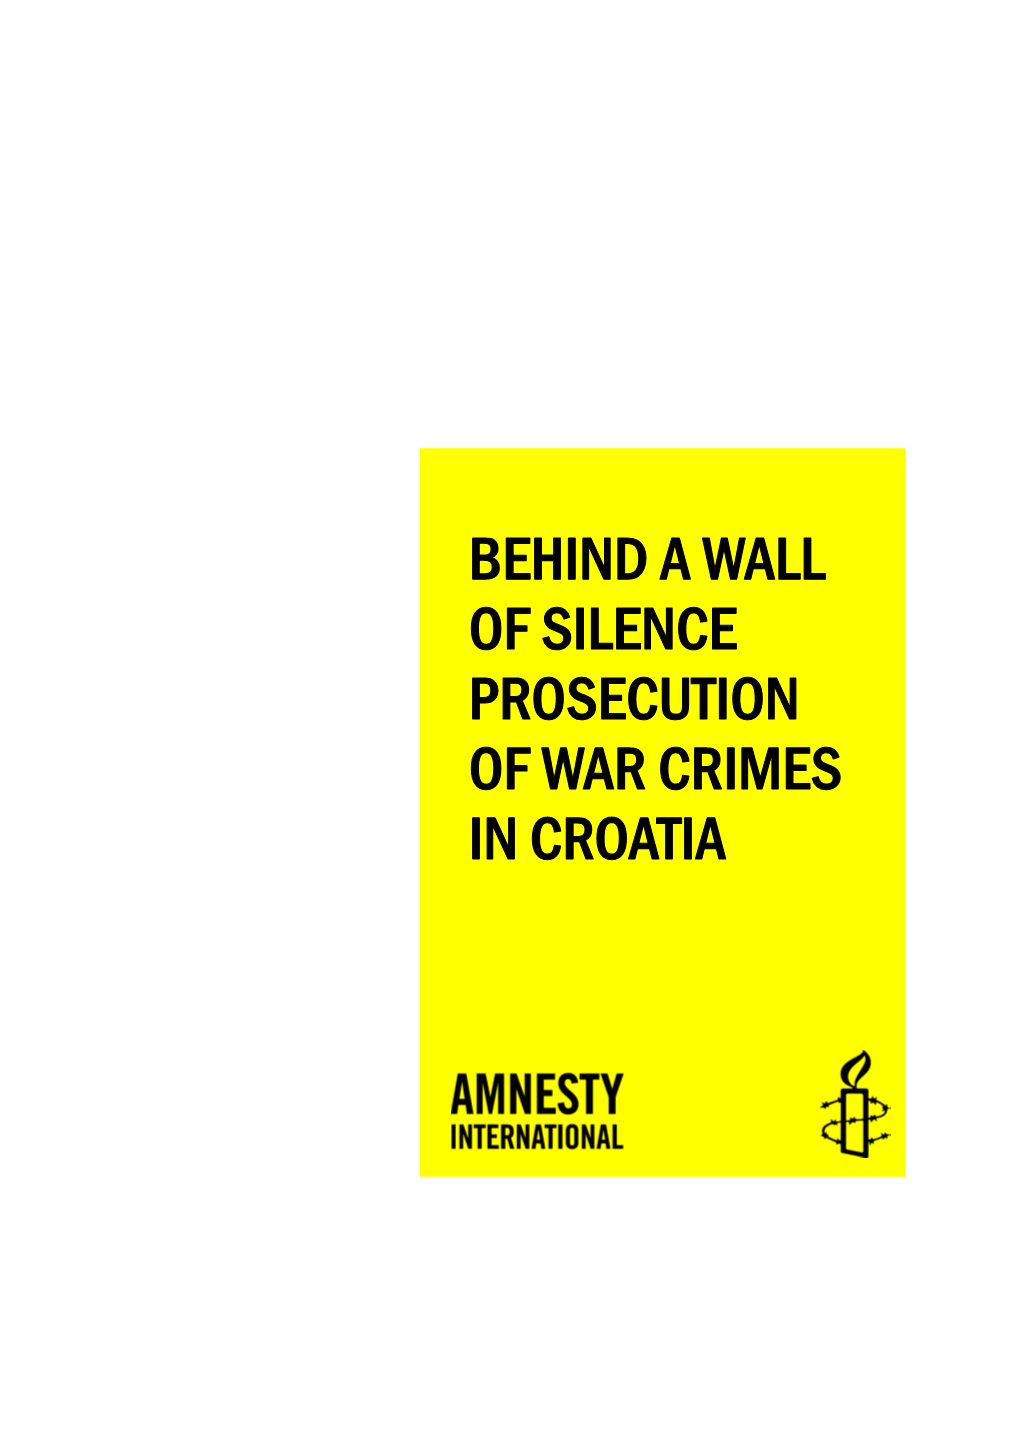 Prosecution of War Crimes in Croatia